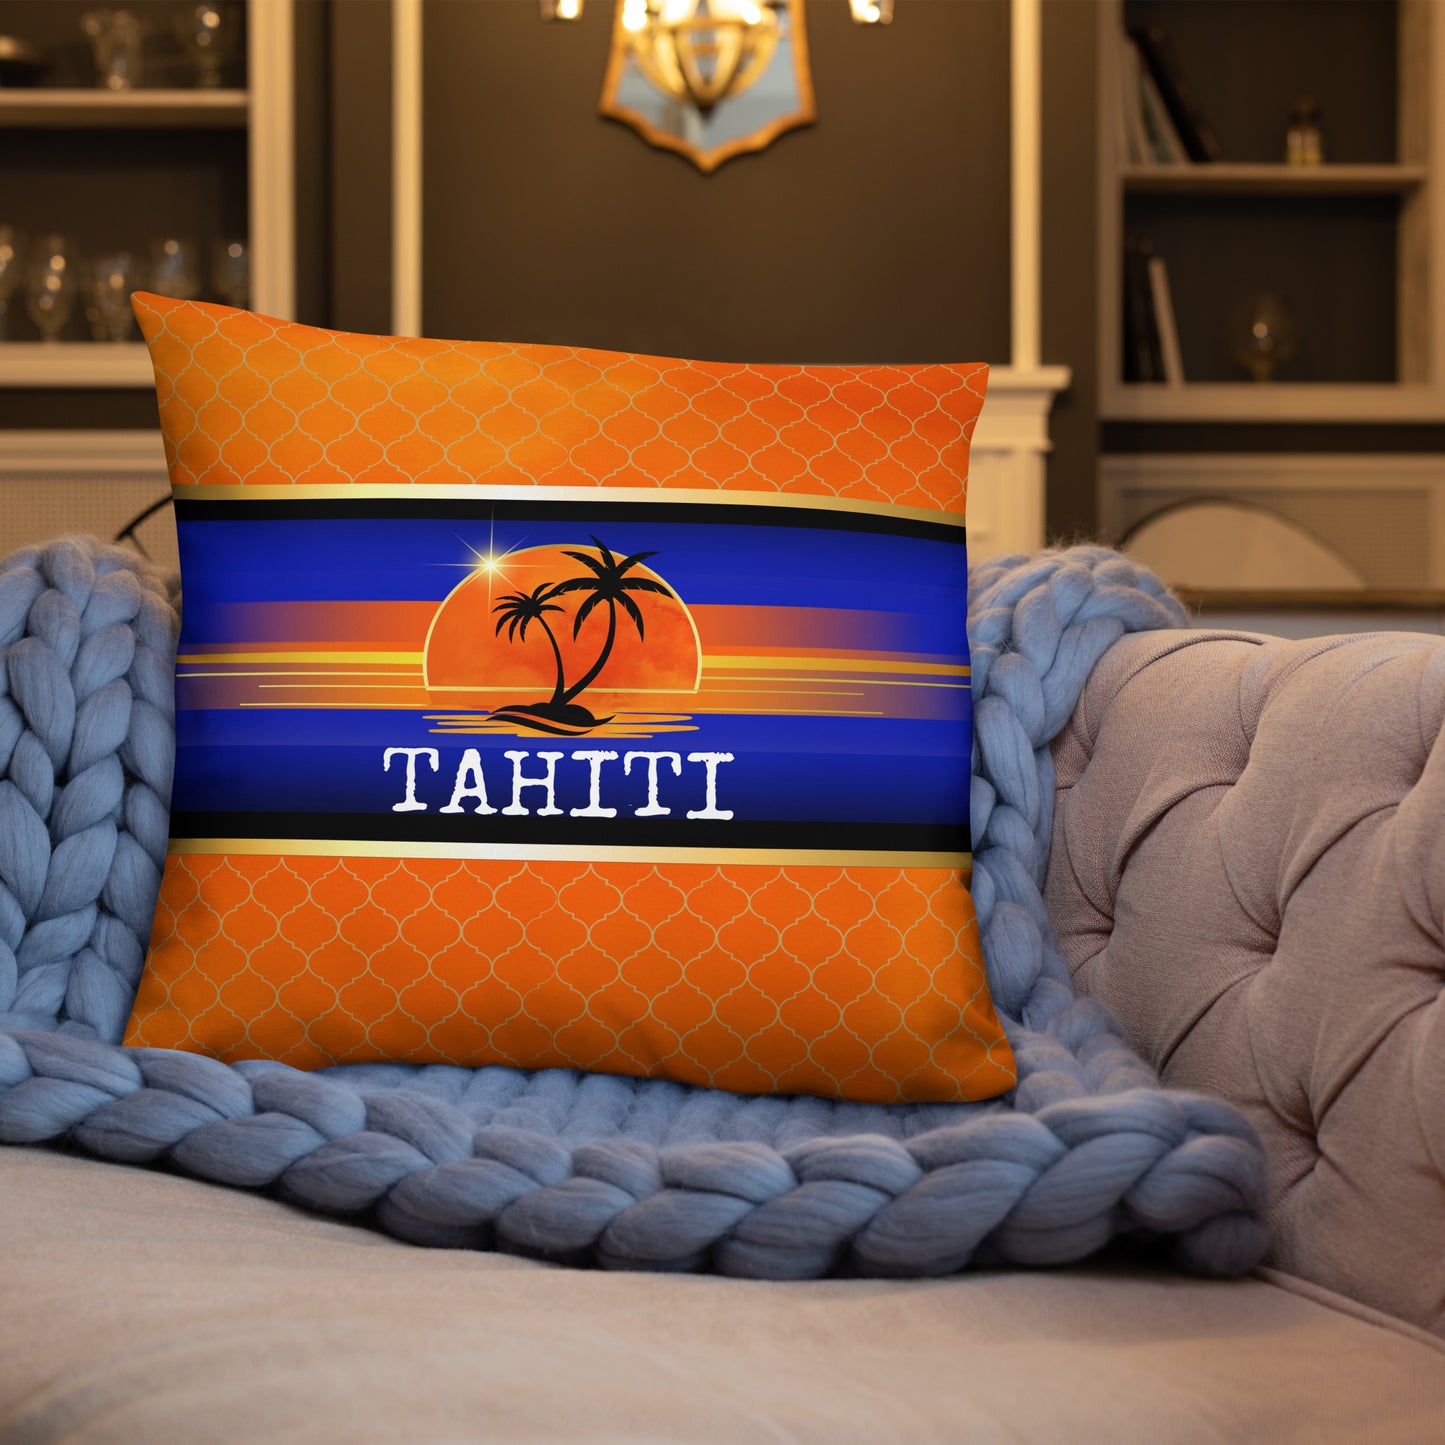 Tahiti Travel Gift | Tahiti Vacation Gift | Tahiti Travel Souvenir | Tahiti Vacation Memento | Tahiti Home Décor | Keepsake Souvenir Gift | Travel Vacation Gift | World Travel Gift Pillow